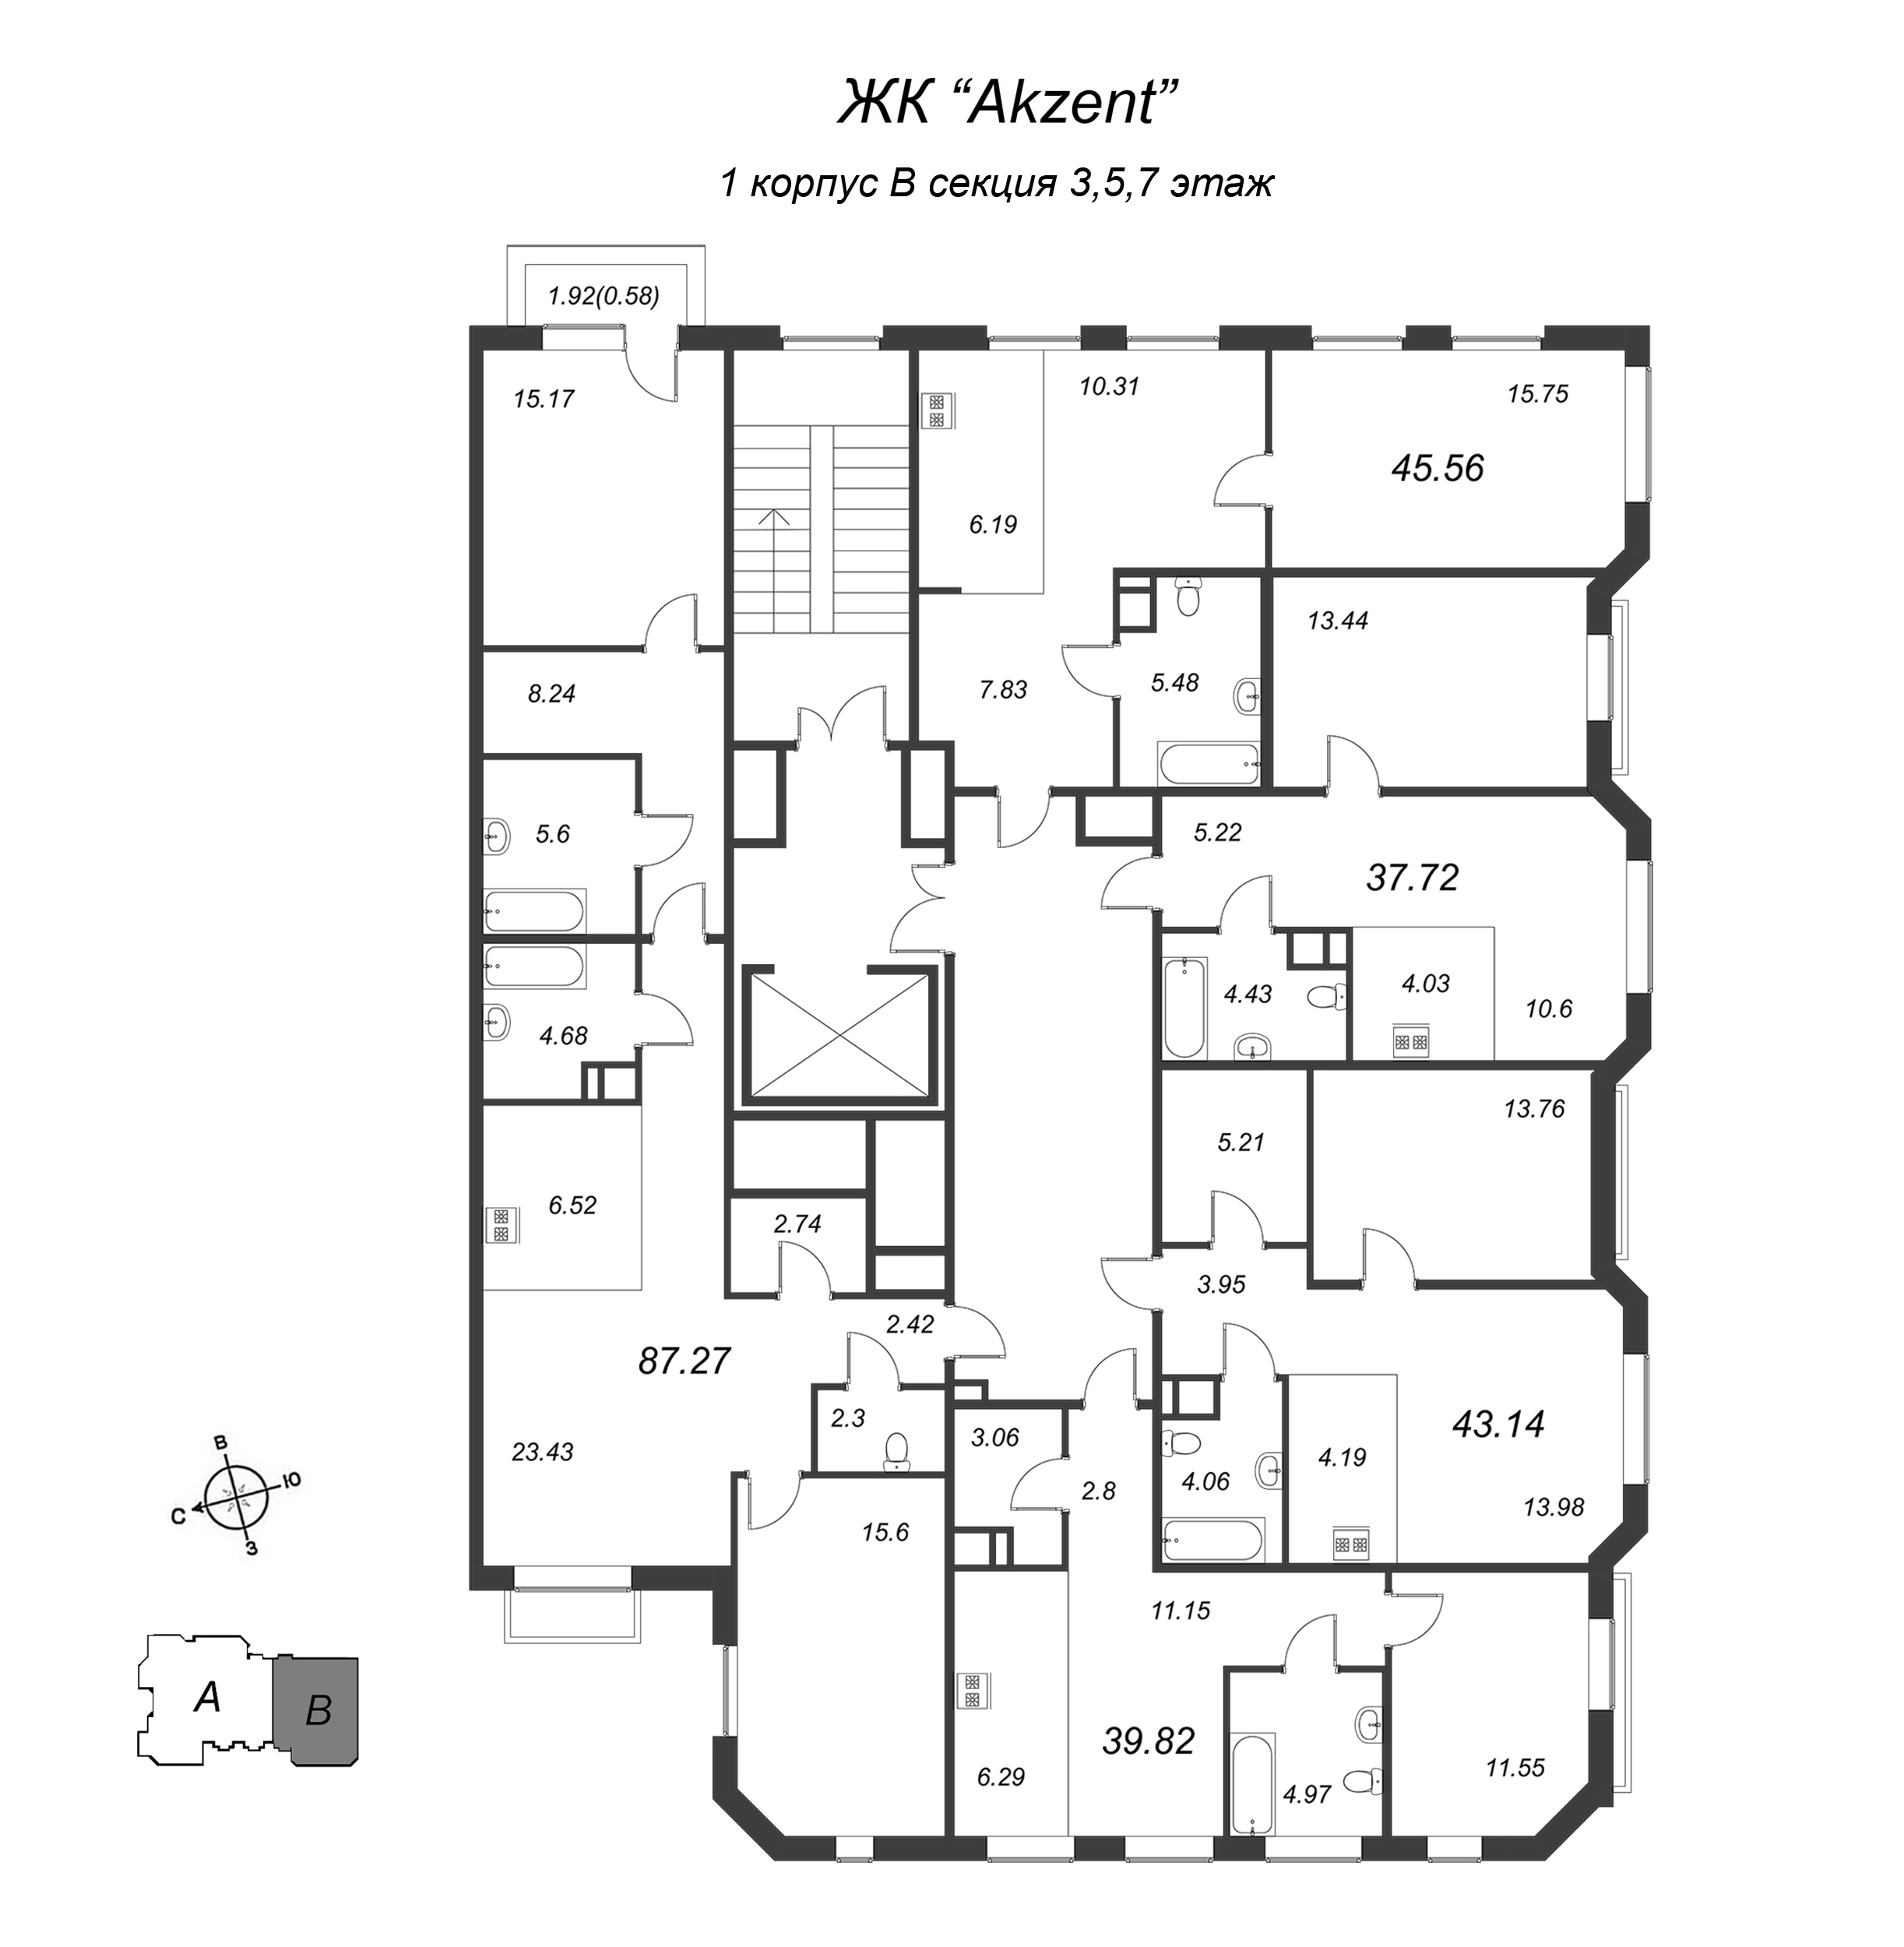 2-комнатная (Евро) квартира, 37.72 м² - планировка этажа